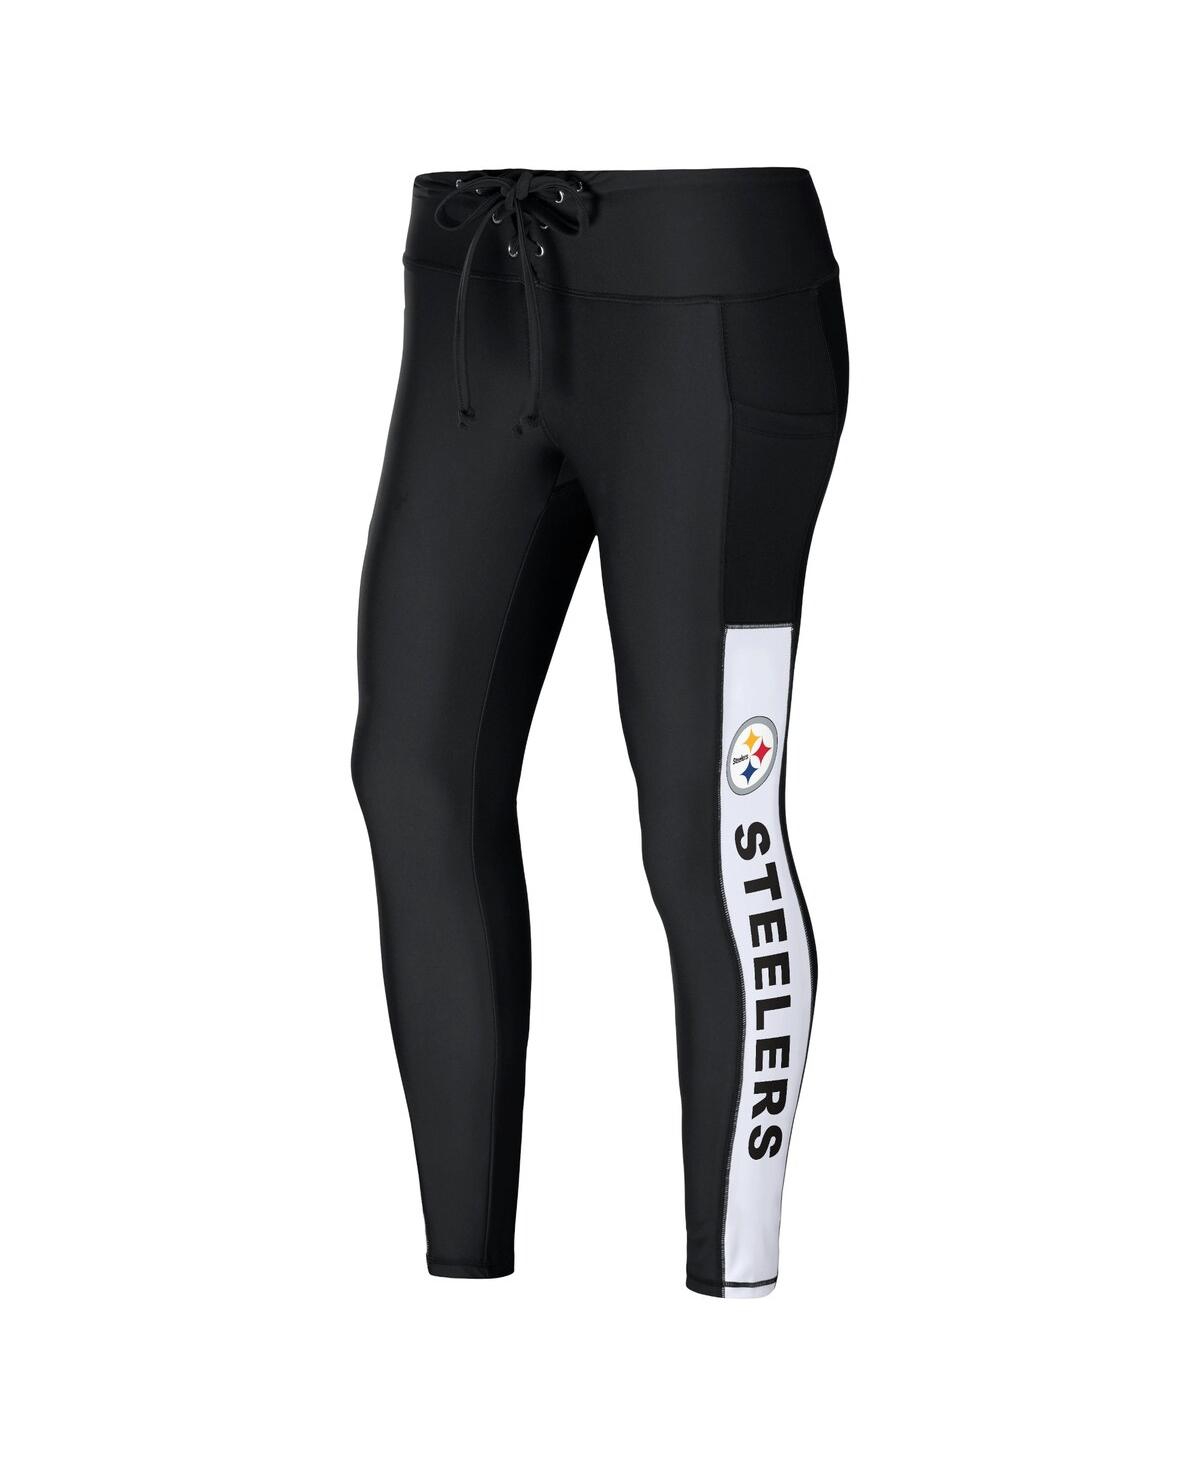 Shop Wear By Erin Andrews Women's  Black Pittsburgh Steelers Leggings